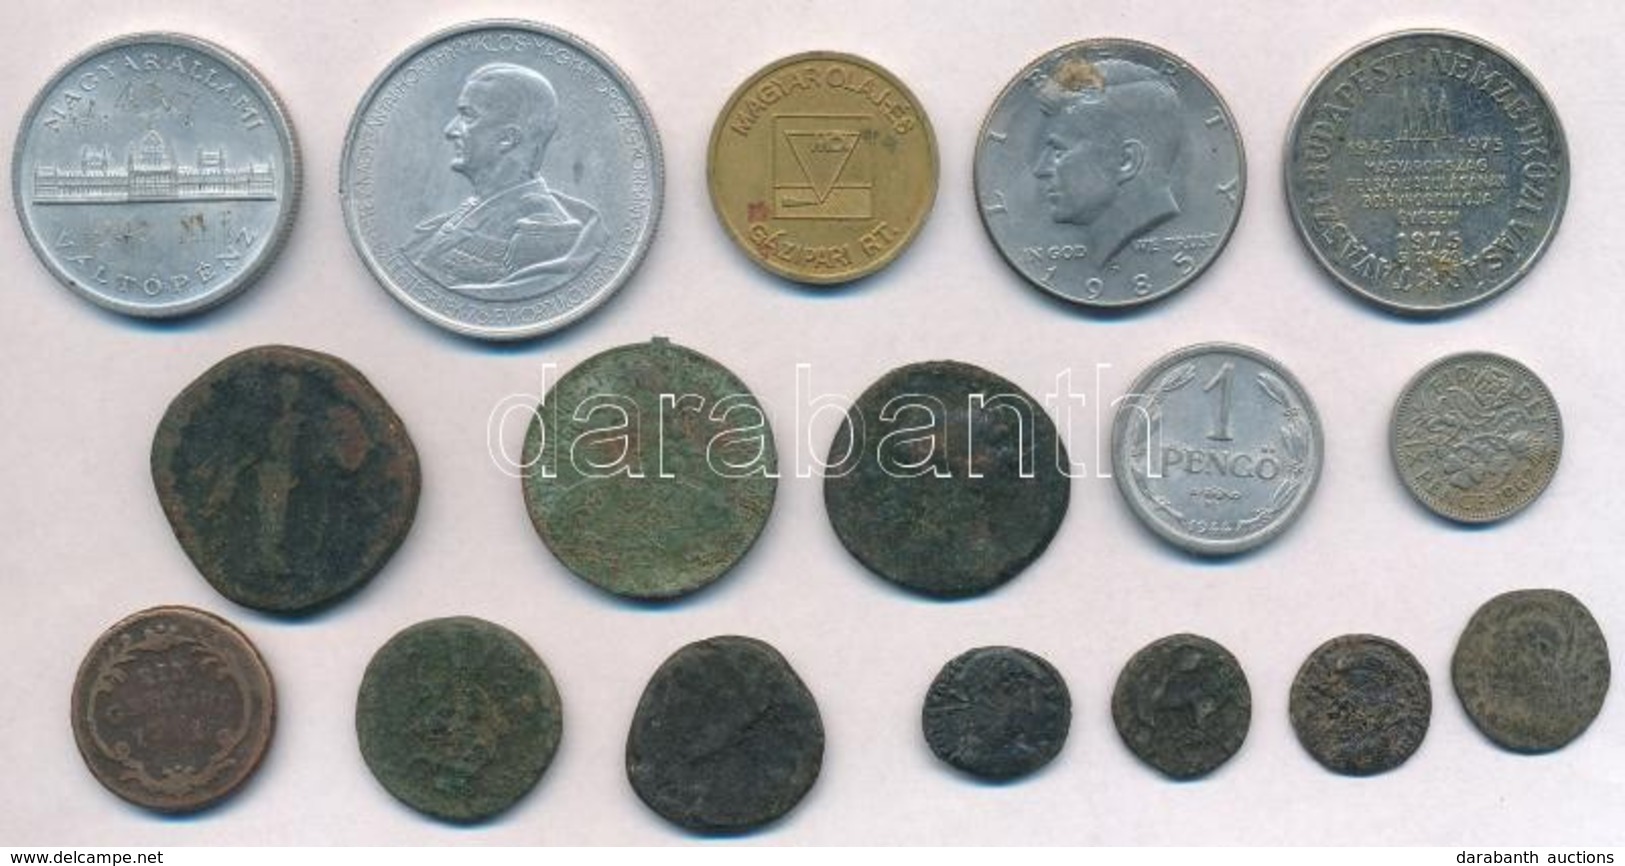 17db-os Vegyes Numizmatikai Tétel, Benne 8db Római Rézpénz T:vegyes
17pcs Of Various Coins And Medallions, Including 8pc - Unclassified